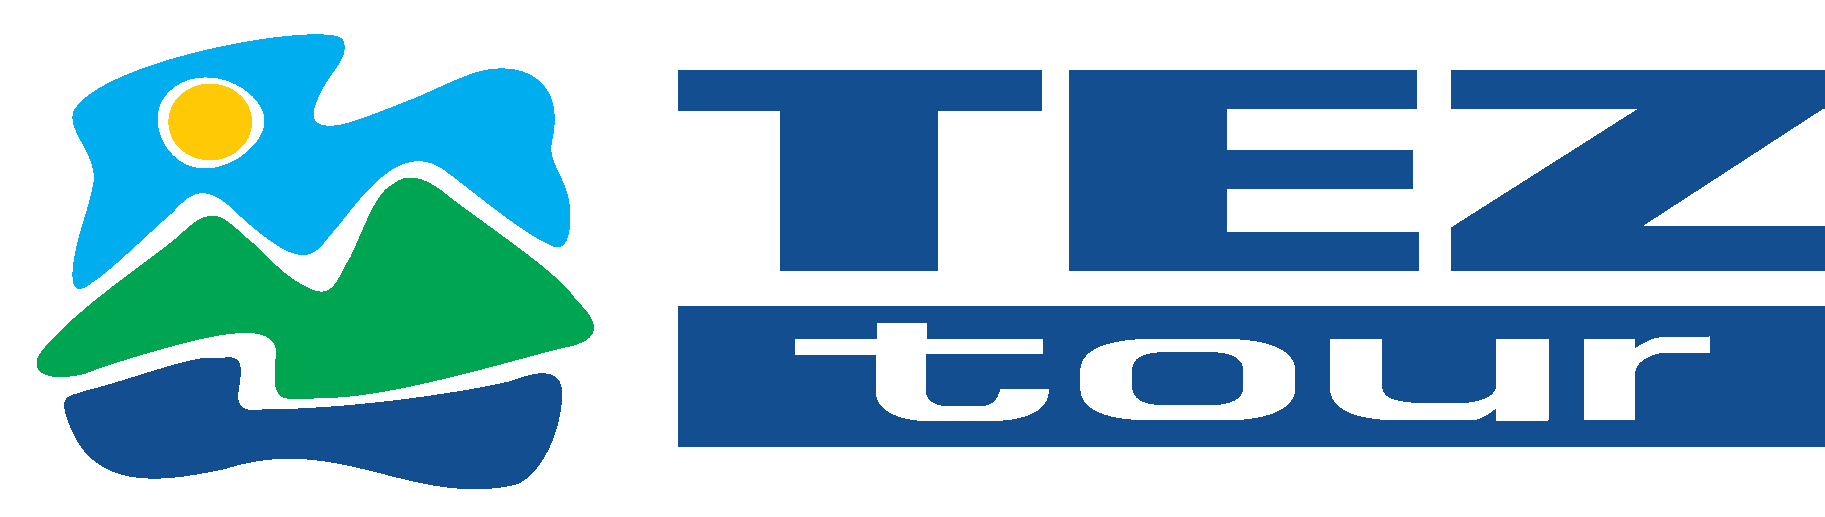 tez tour logo png